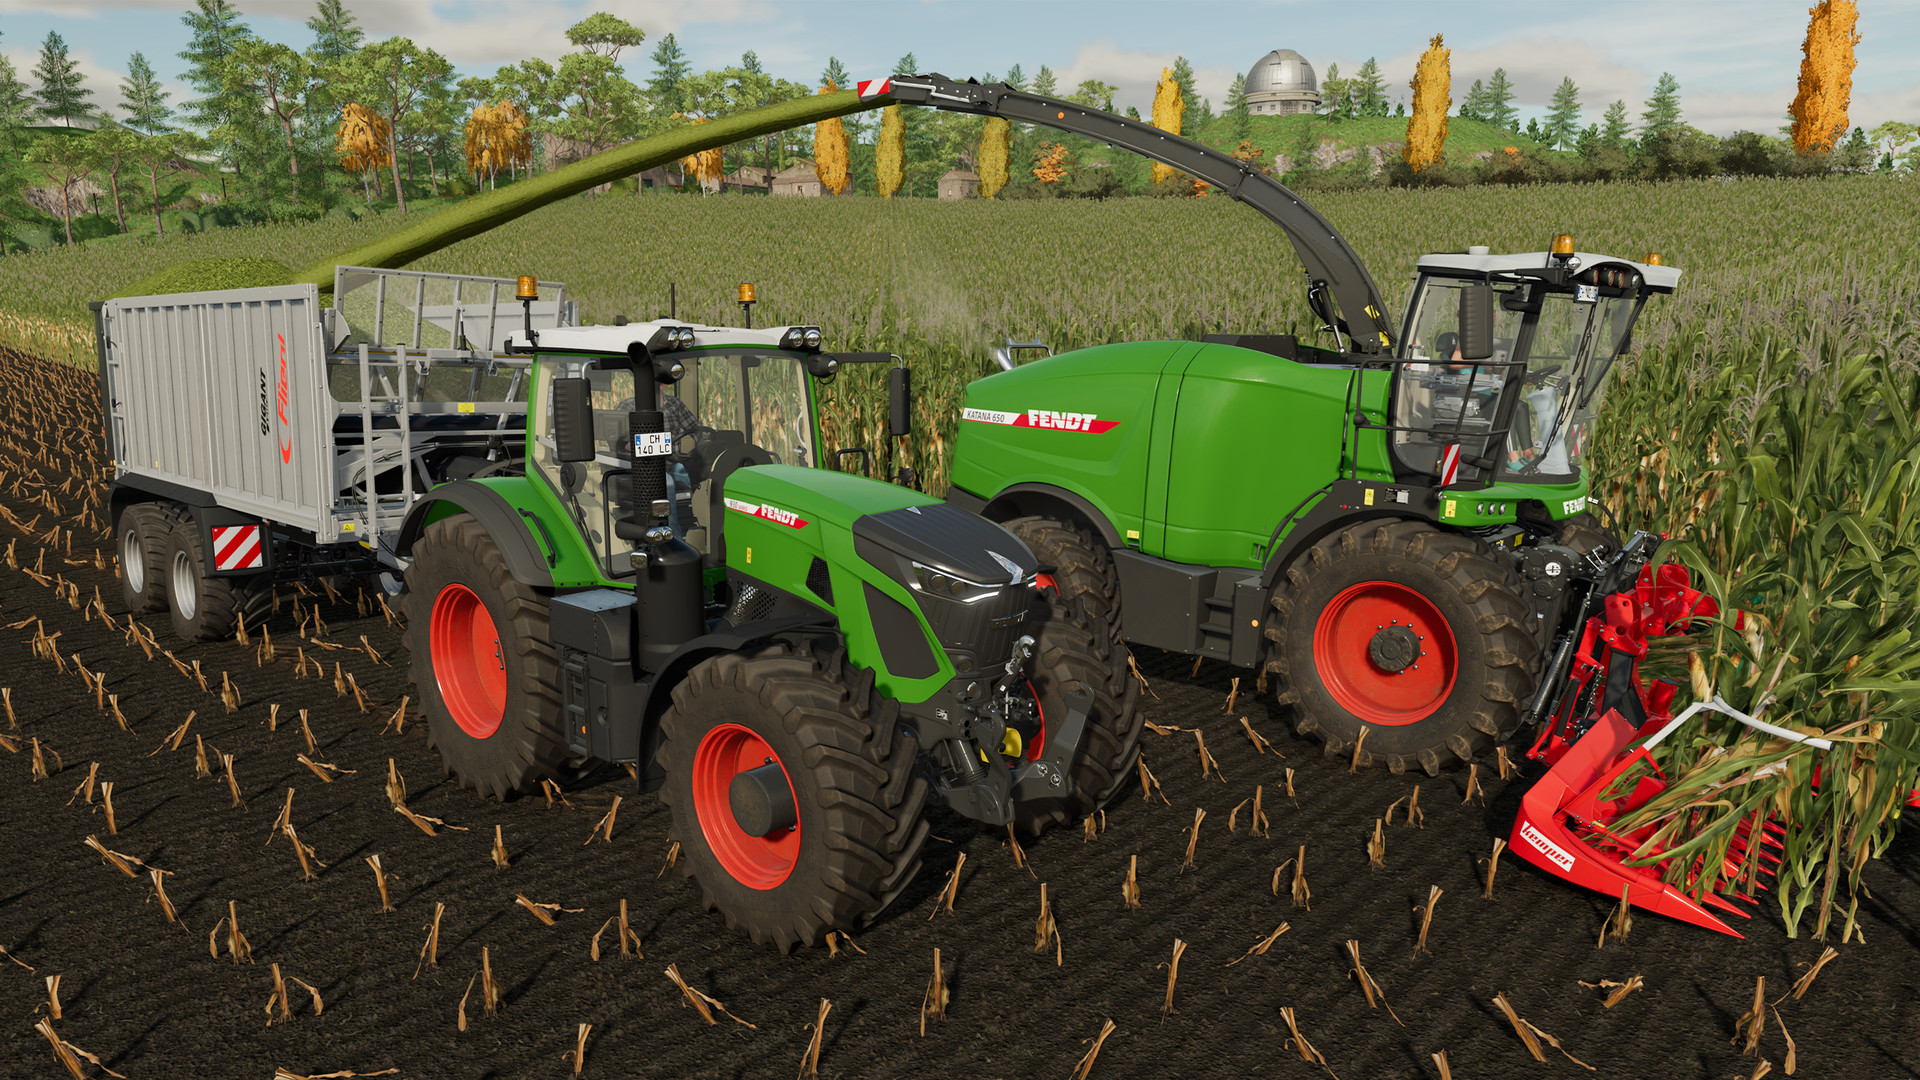 Image du jeu Farming Simulator 22